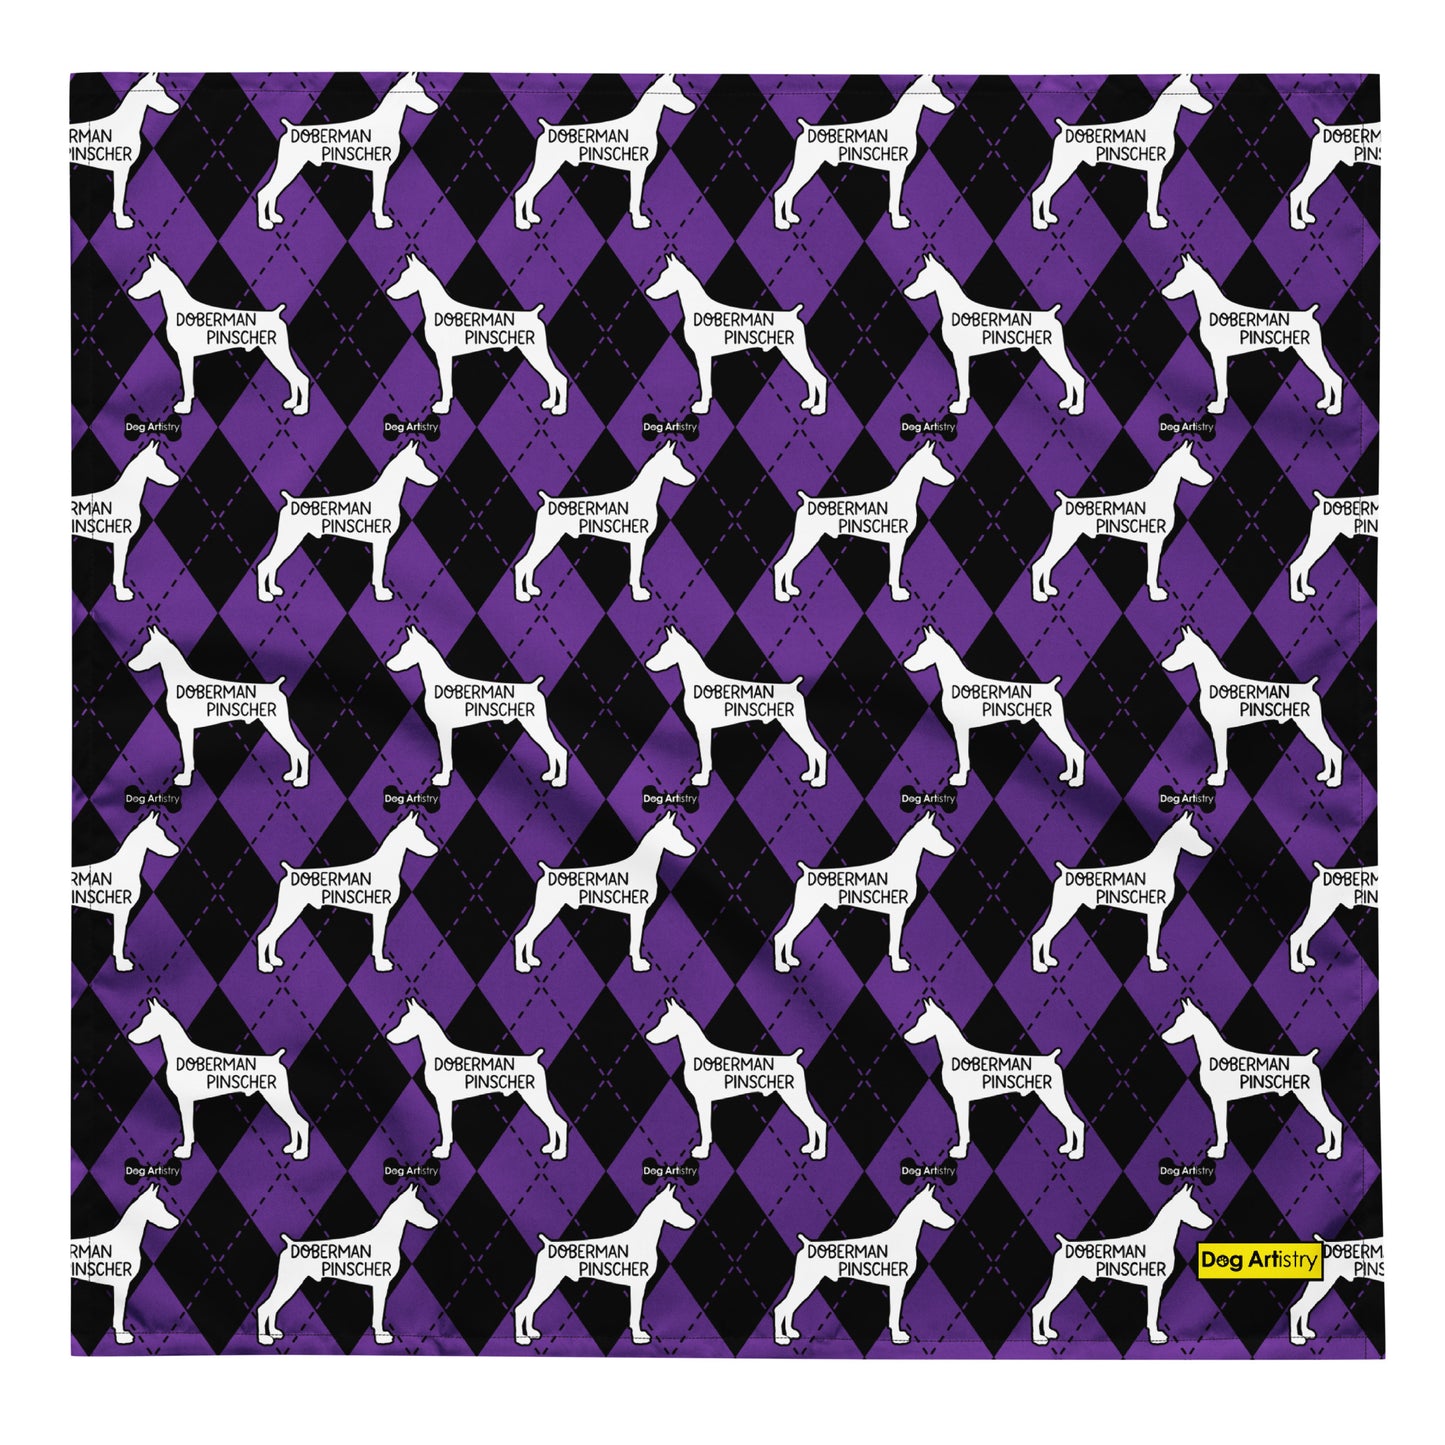 Doberman Pinscher Argyle Purple and Black All-over print bandana